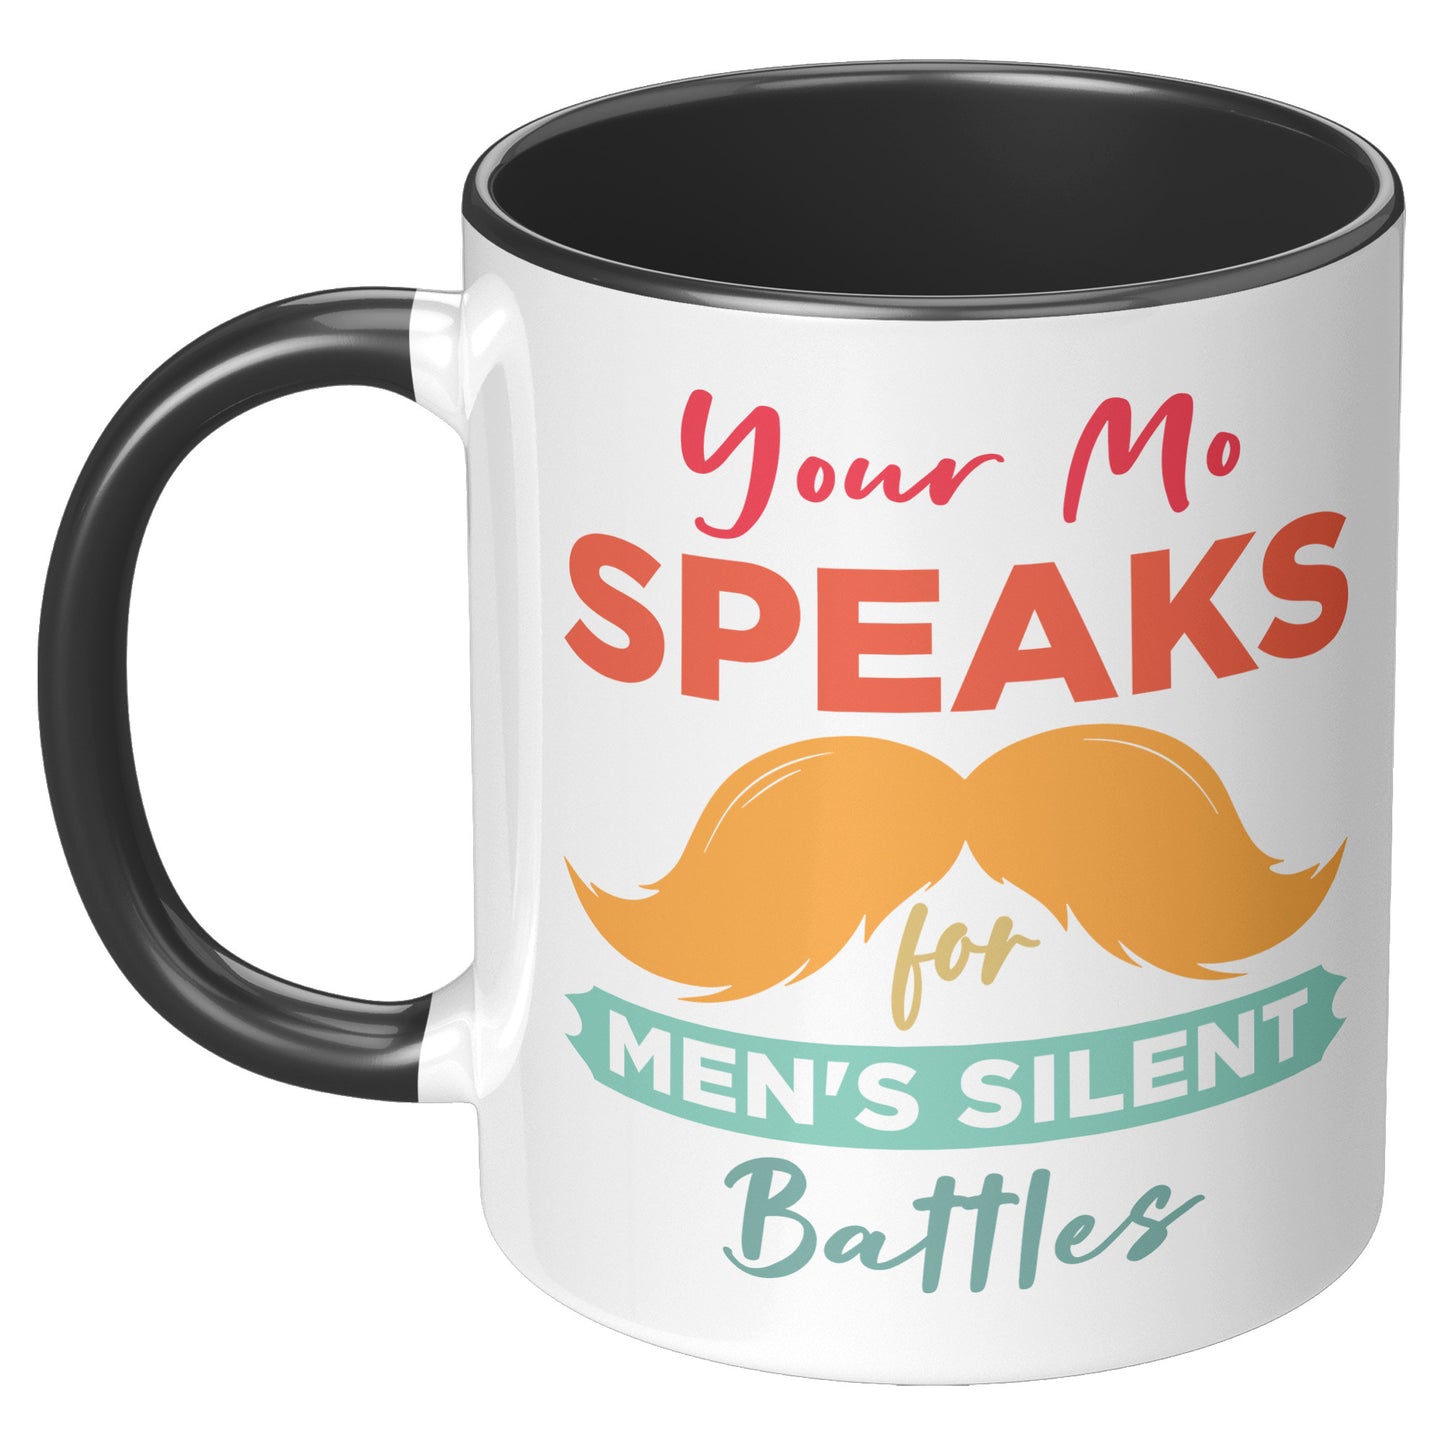 11oz Accent Mug Movember Your Mo Speaks For Men's Silent Battles Both Side